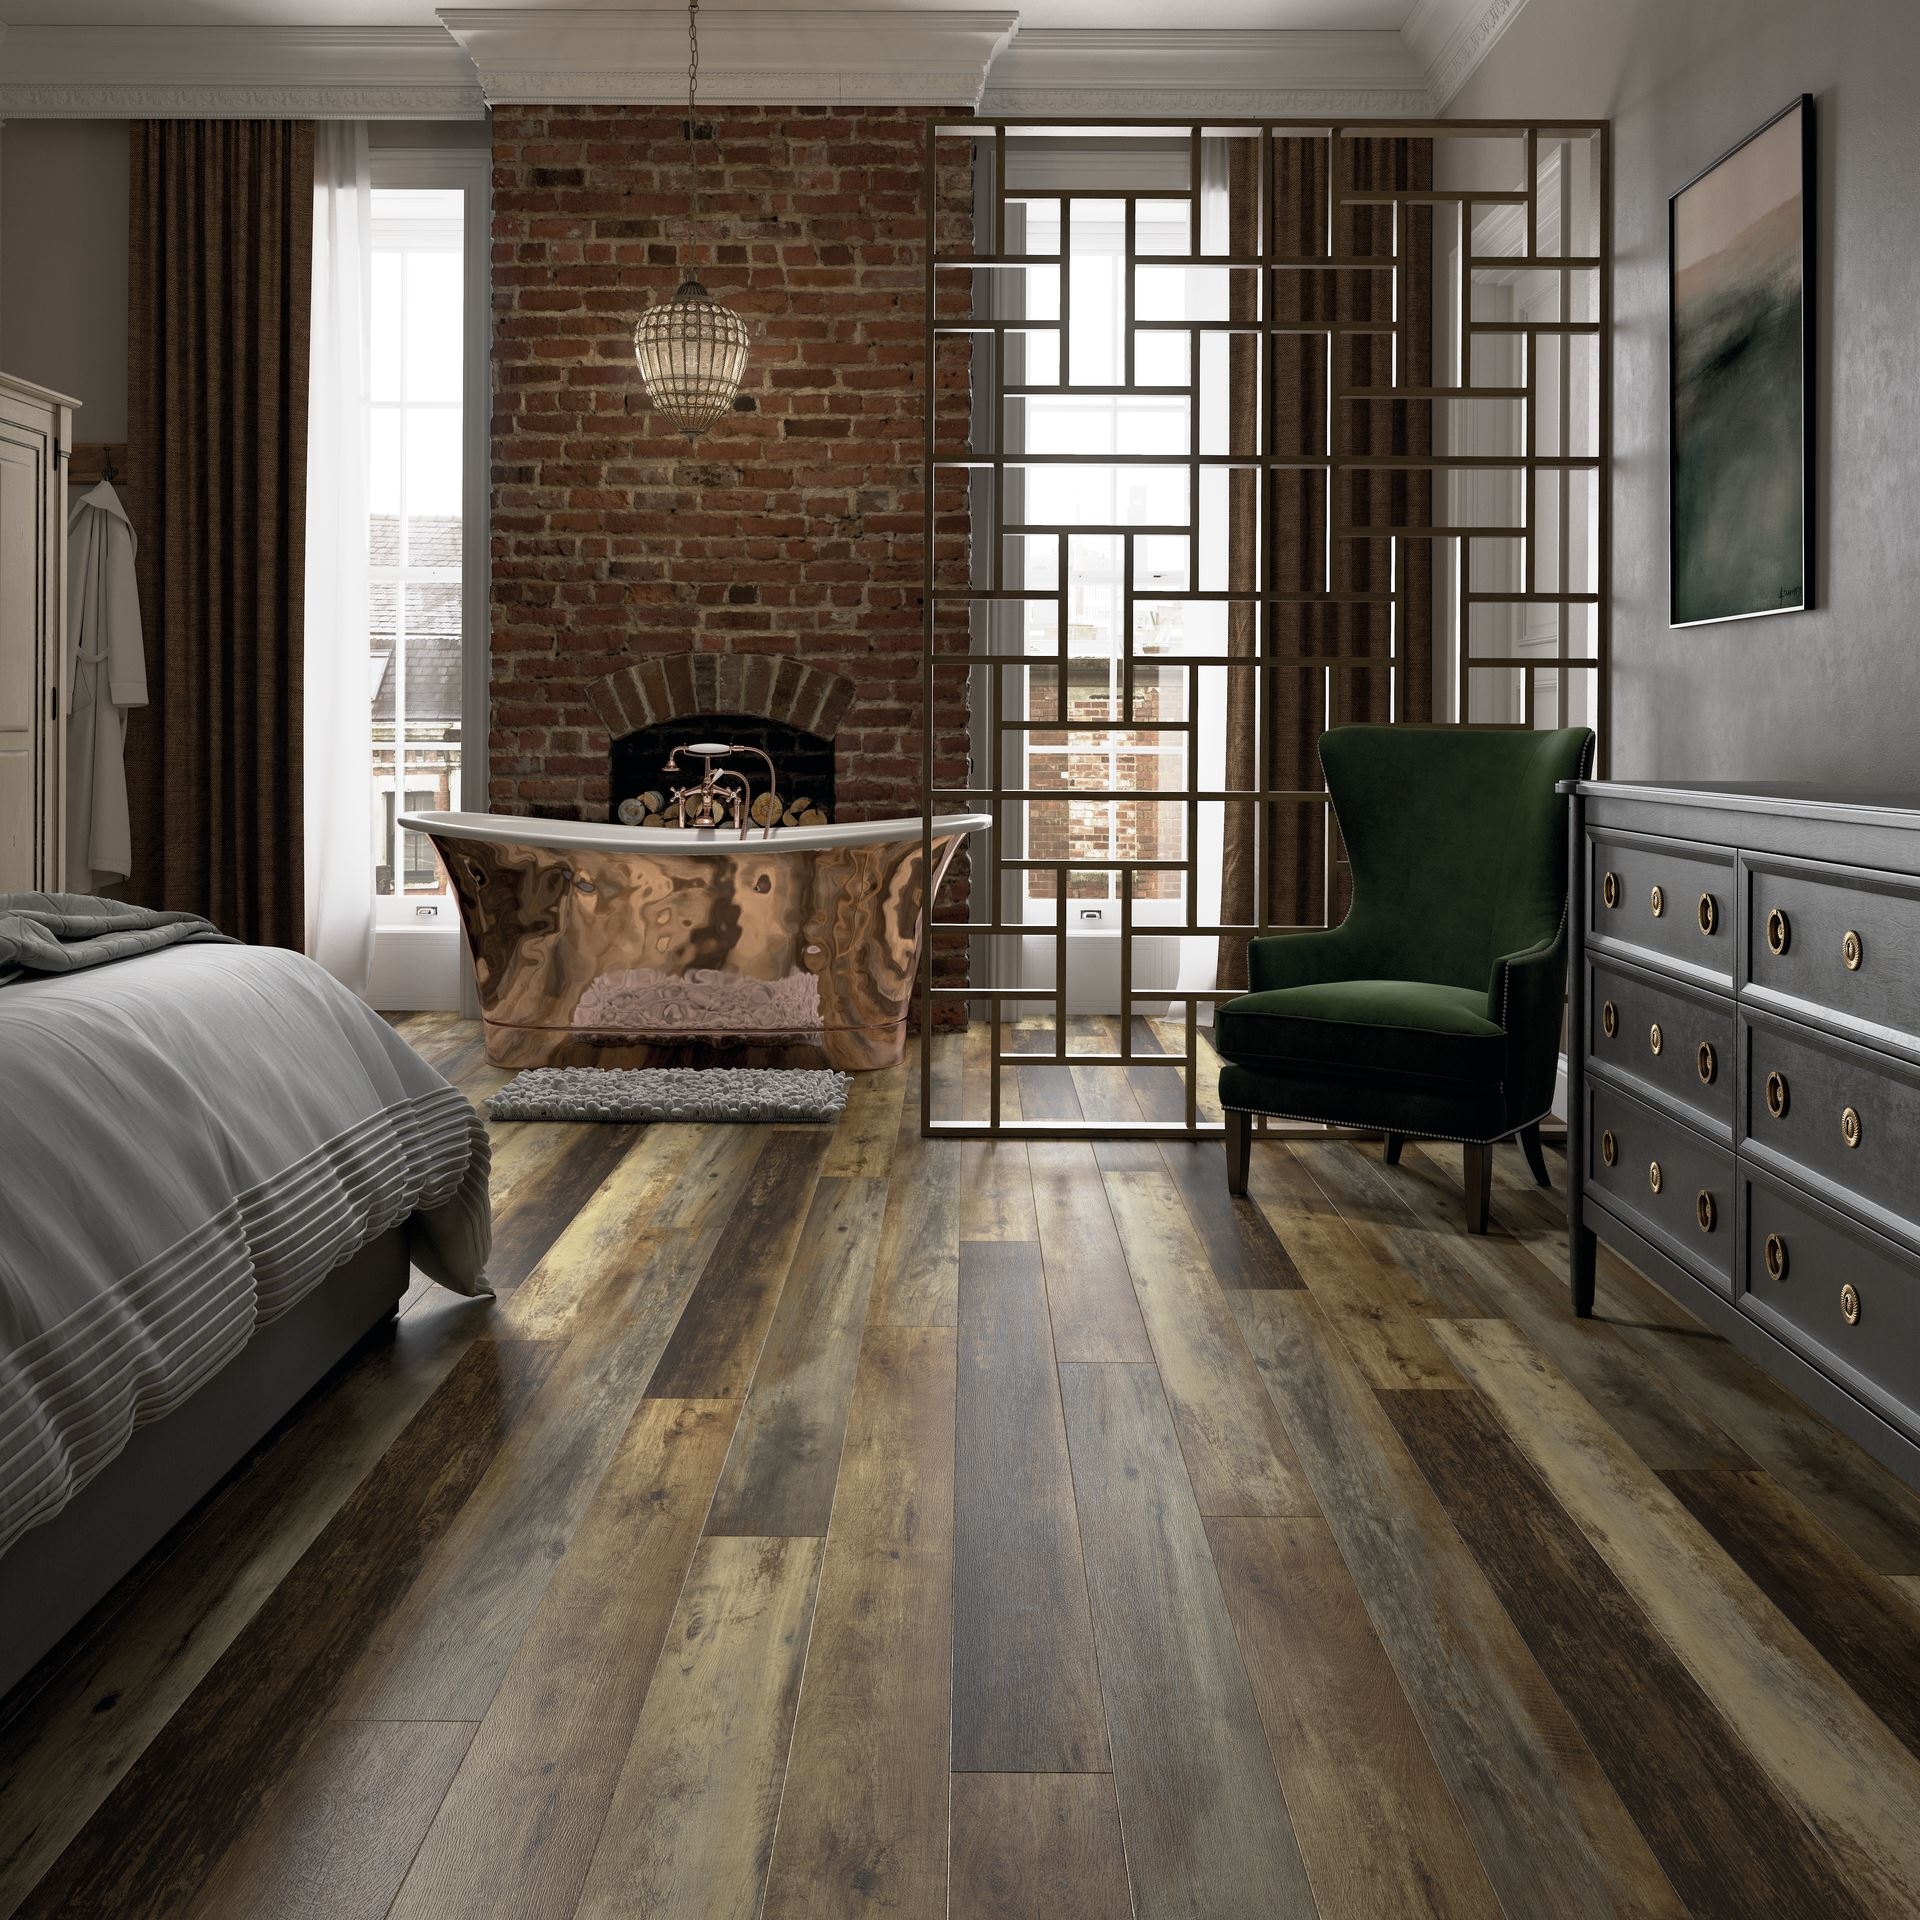 Polyflor Expona Design Rustic Spiced, Rustic Spiced Oak Laminate Wood Flooring